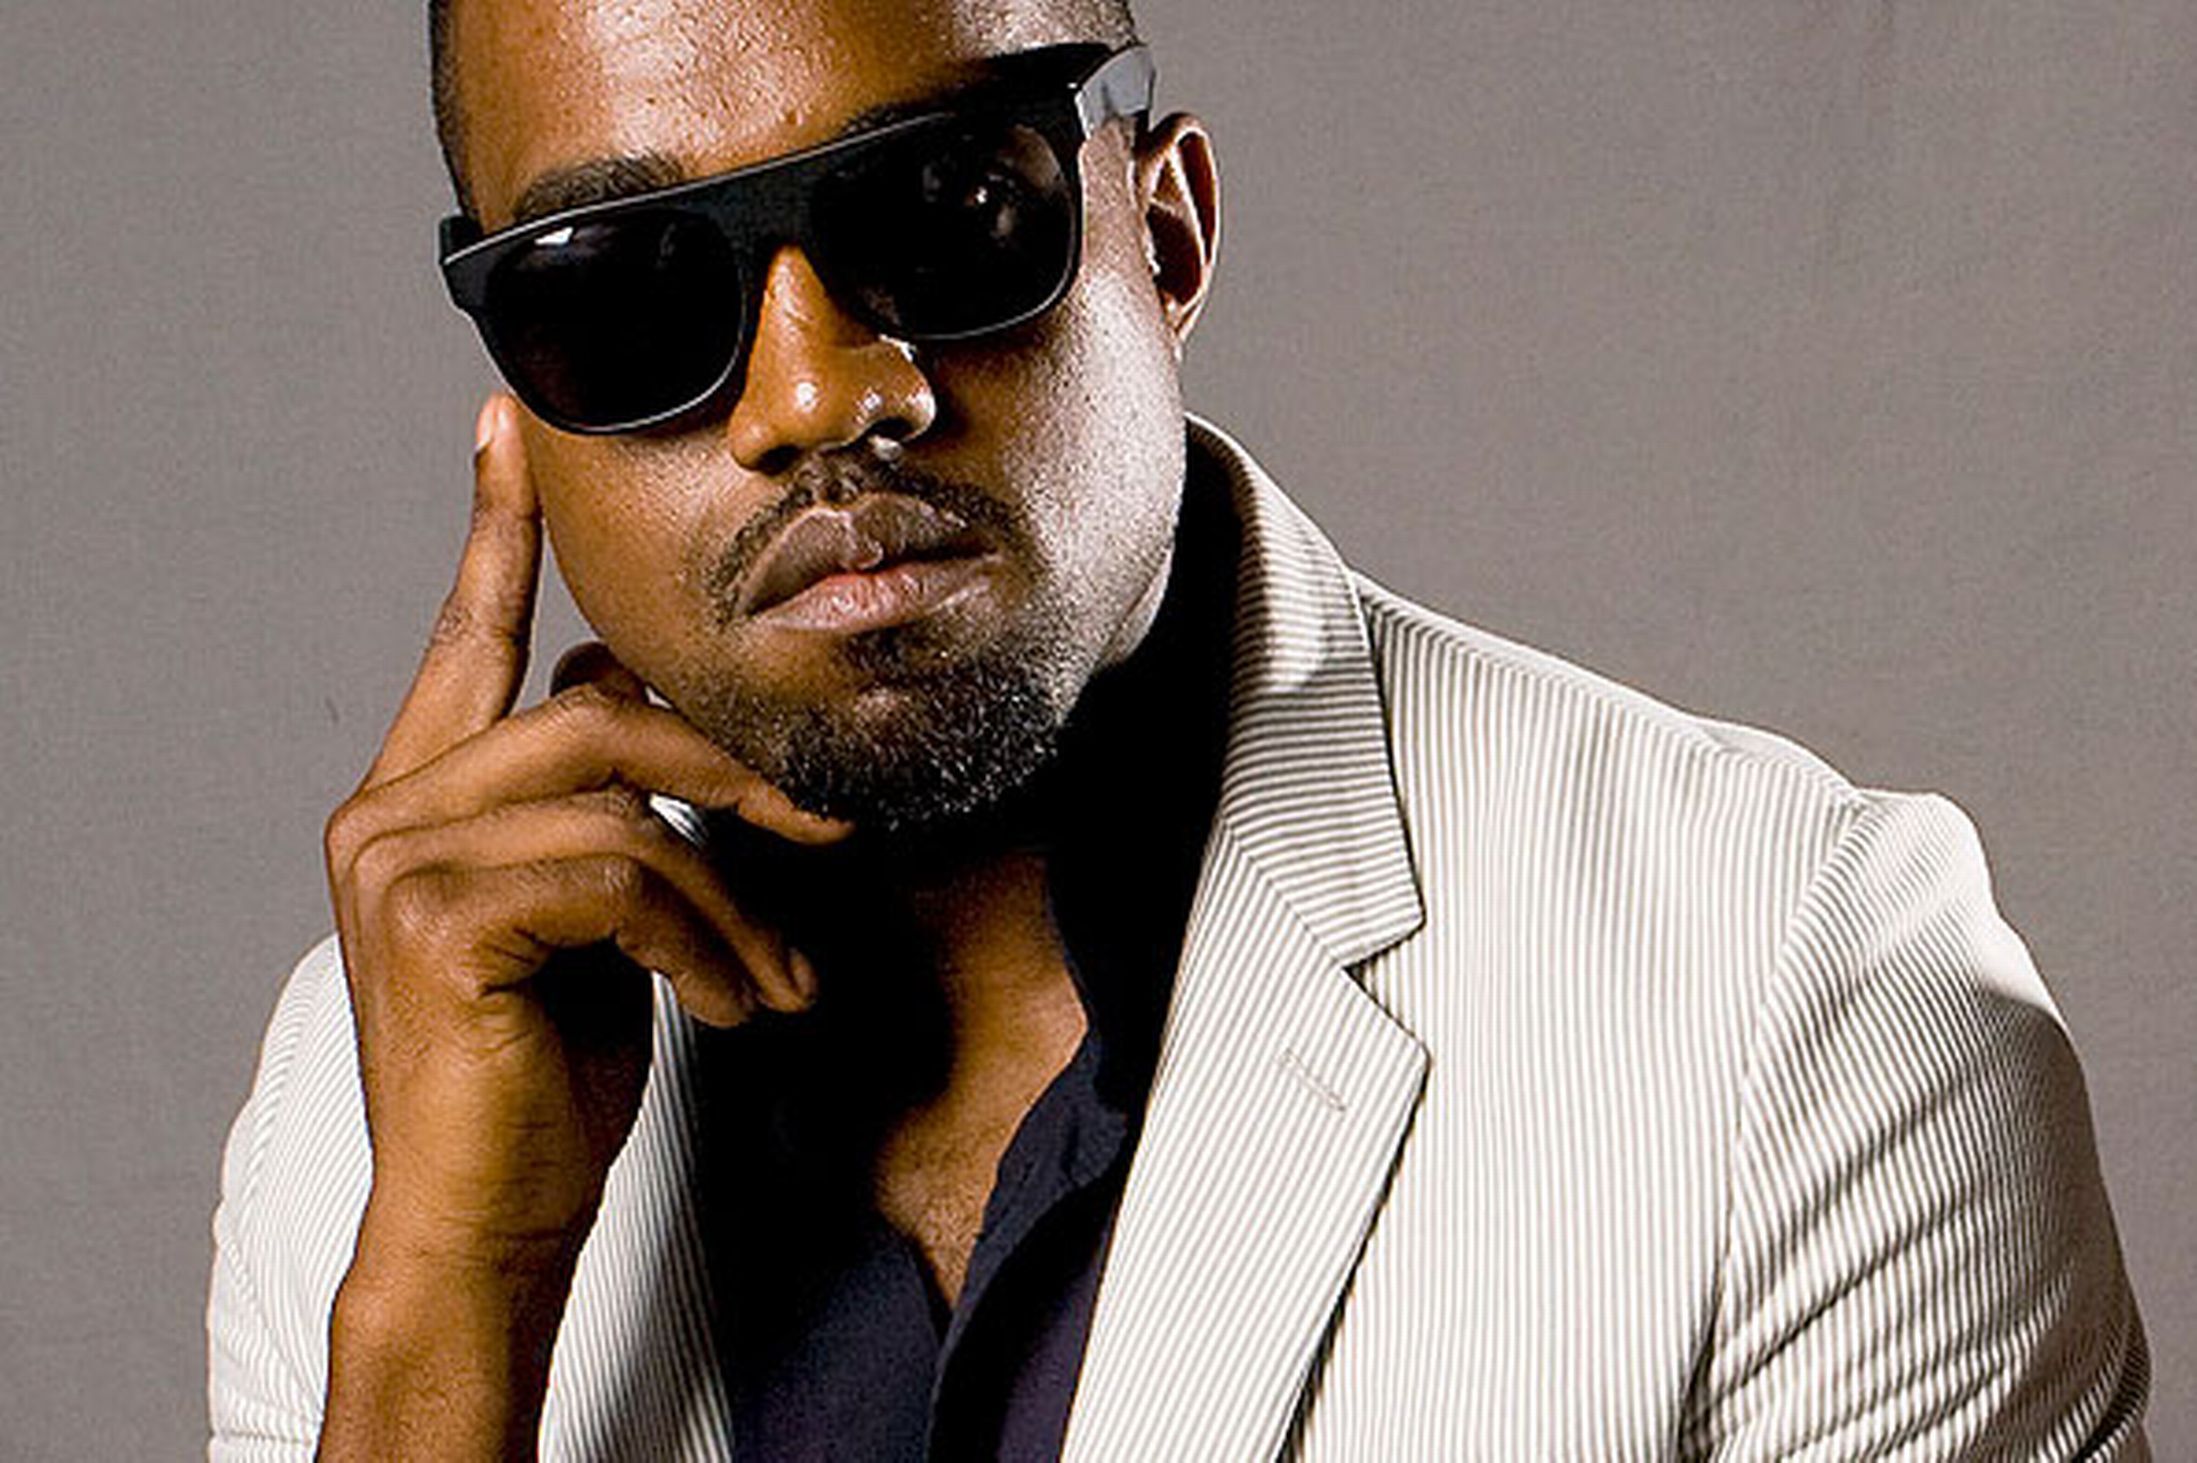 Download Kanye West Wallpaper Cool #68qv0b - Download Page - Ehiyo.com